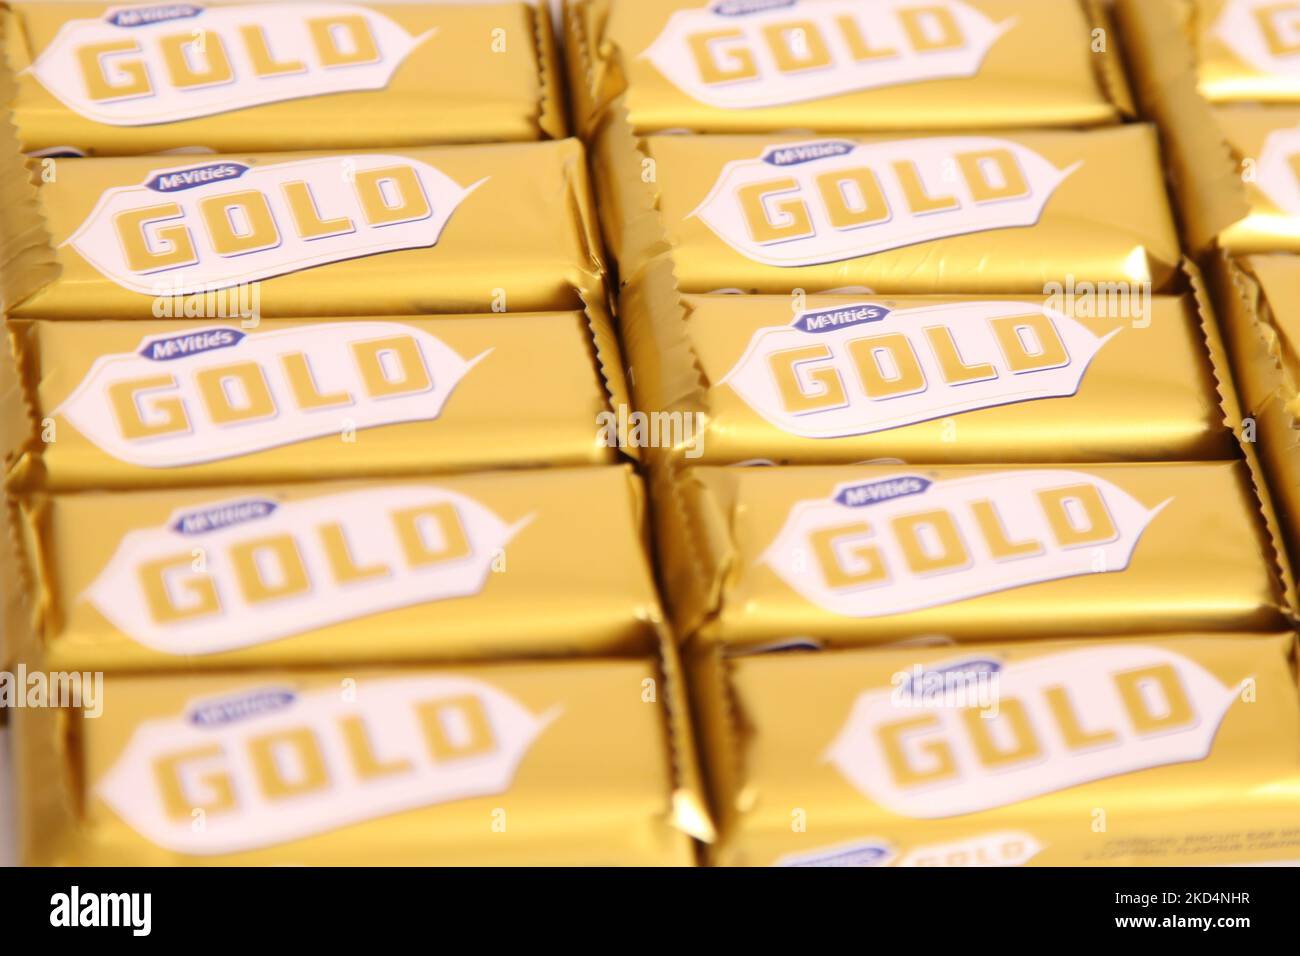 McVities Gold Bars - golden chocolate bar snack treat Stock Photo